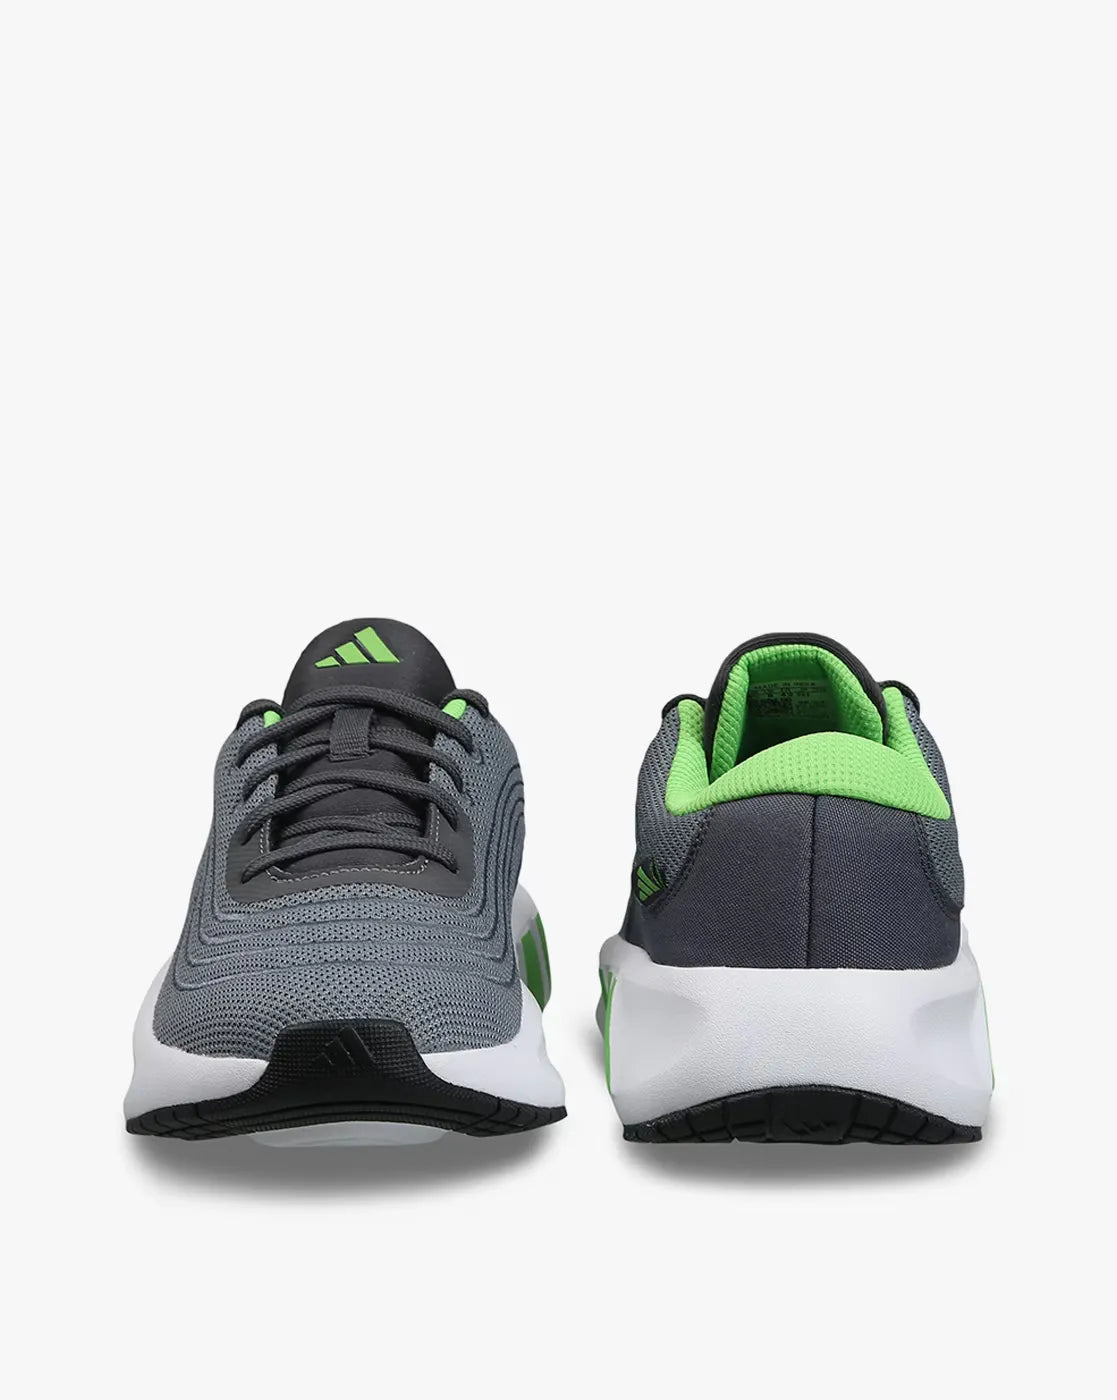 Adidas IQ9021 Cloud Tec Men's Running Shoes - Defy Gravity